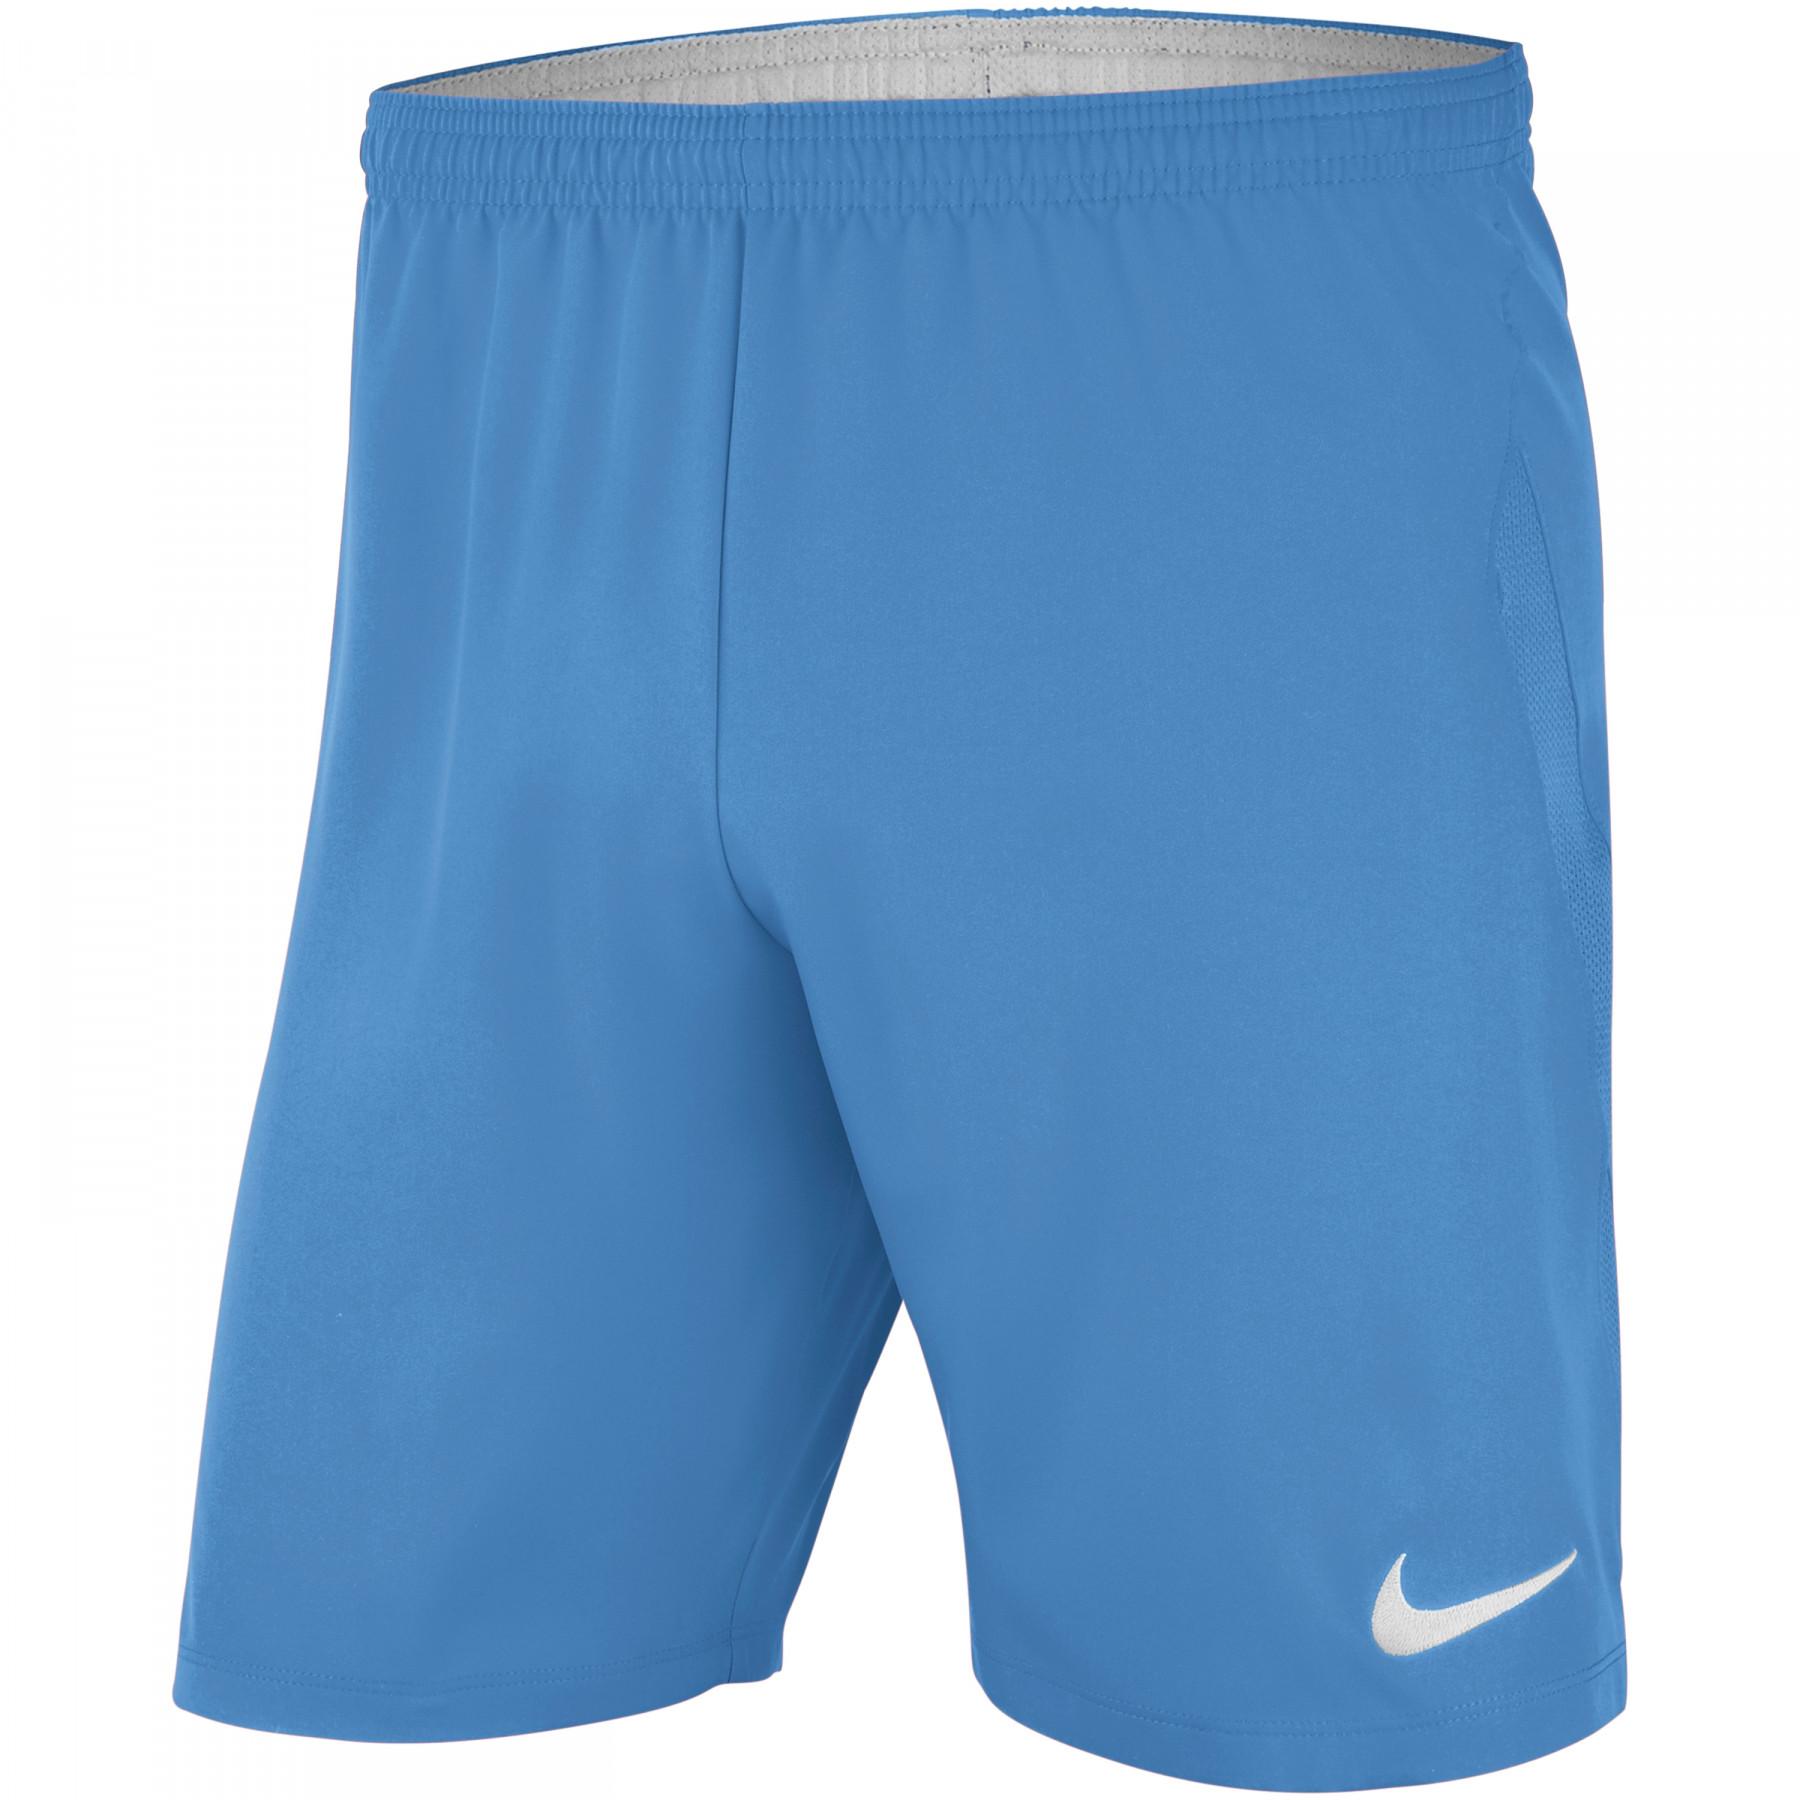 Children's shorts Nike Dri-FIT Laser IV